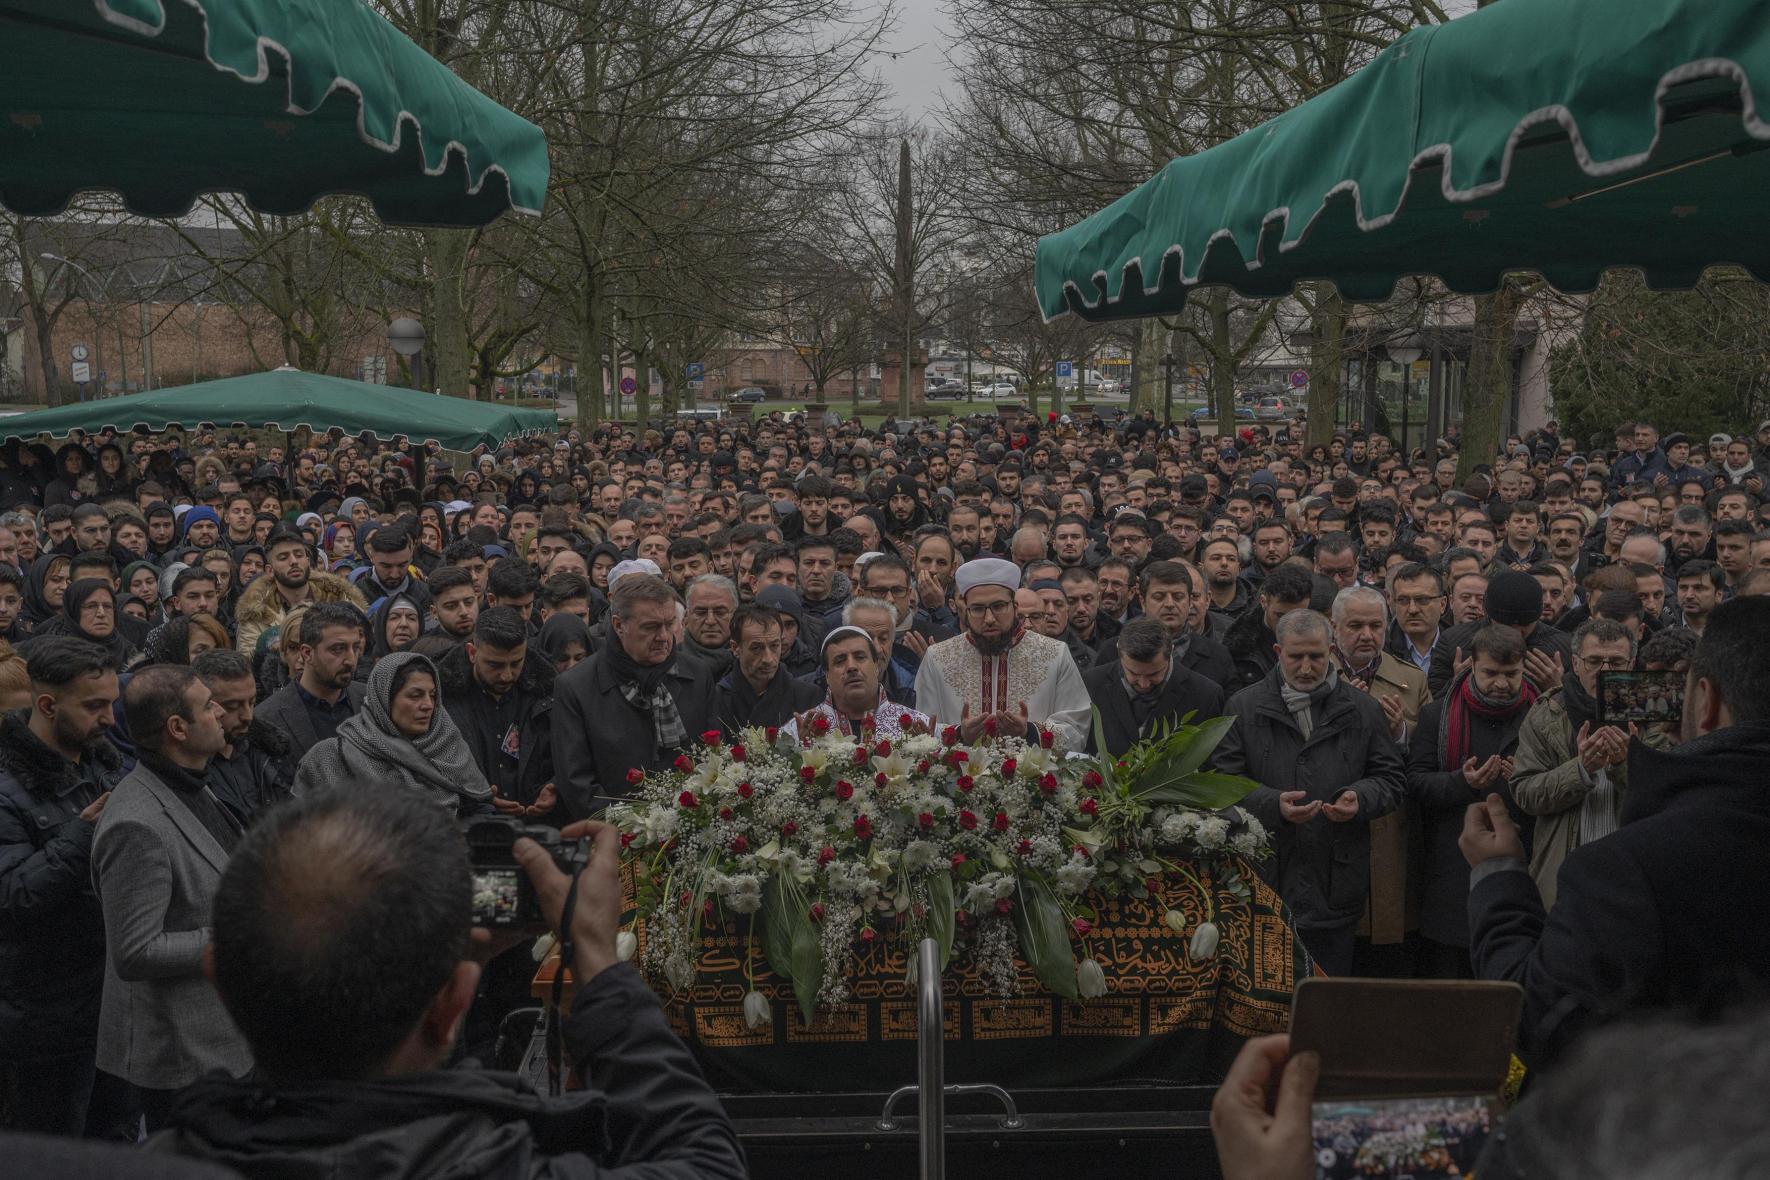 H κηδεία του Φερχάτ Ουνβάρ που δολοφονήθηκε στο Χάναου της Γερμανίας. Ο Φερχάτ ήταν ένας κοινωνικός νεαρός με πολλούς φίλους στην πόλη